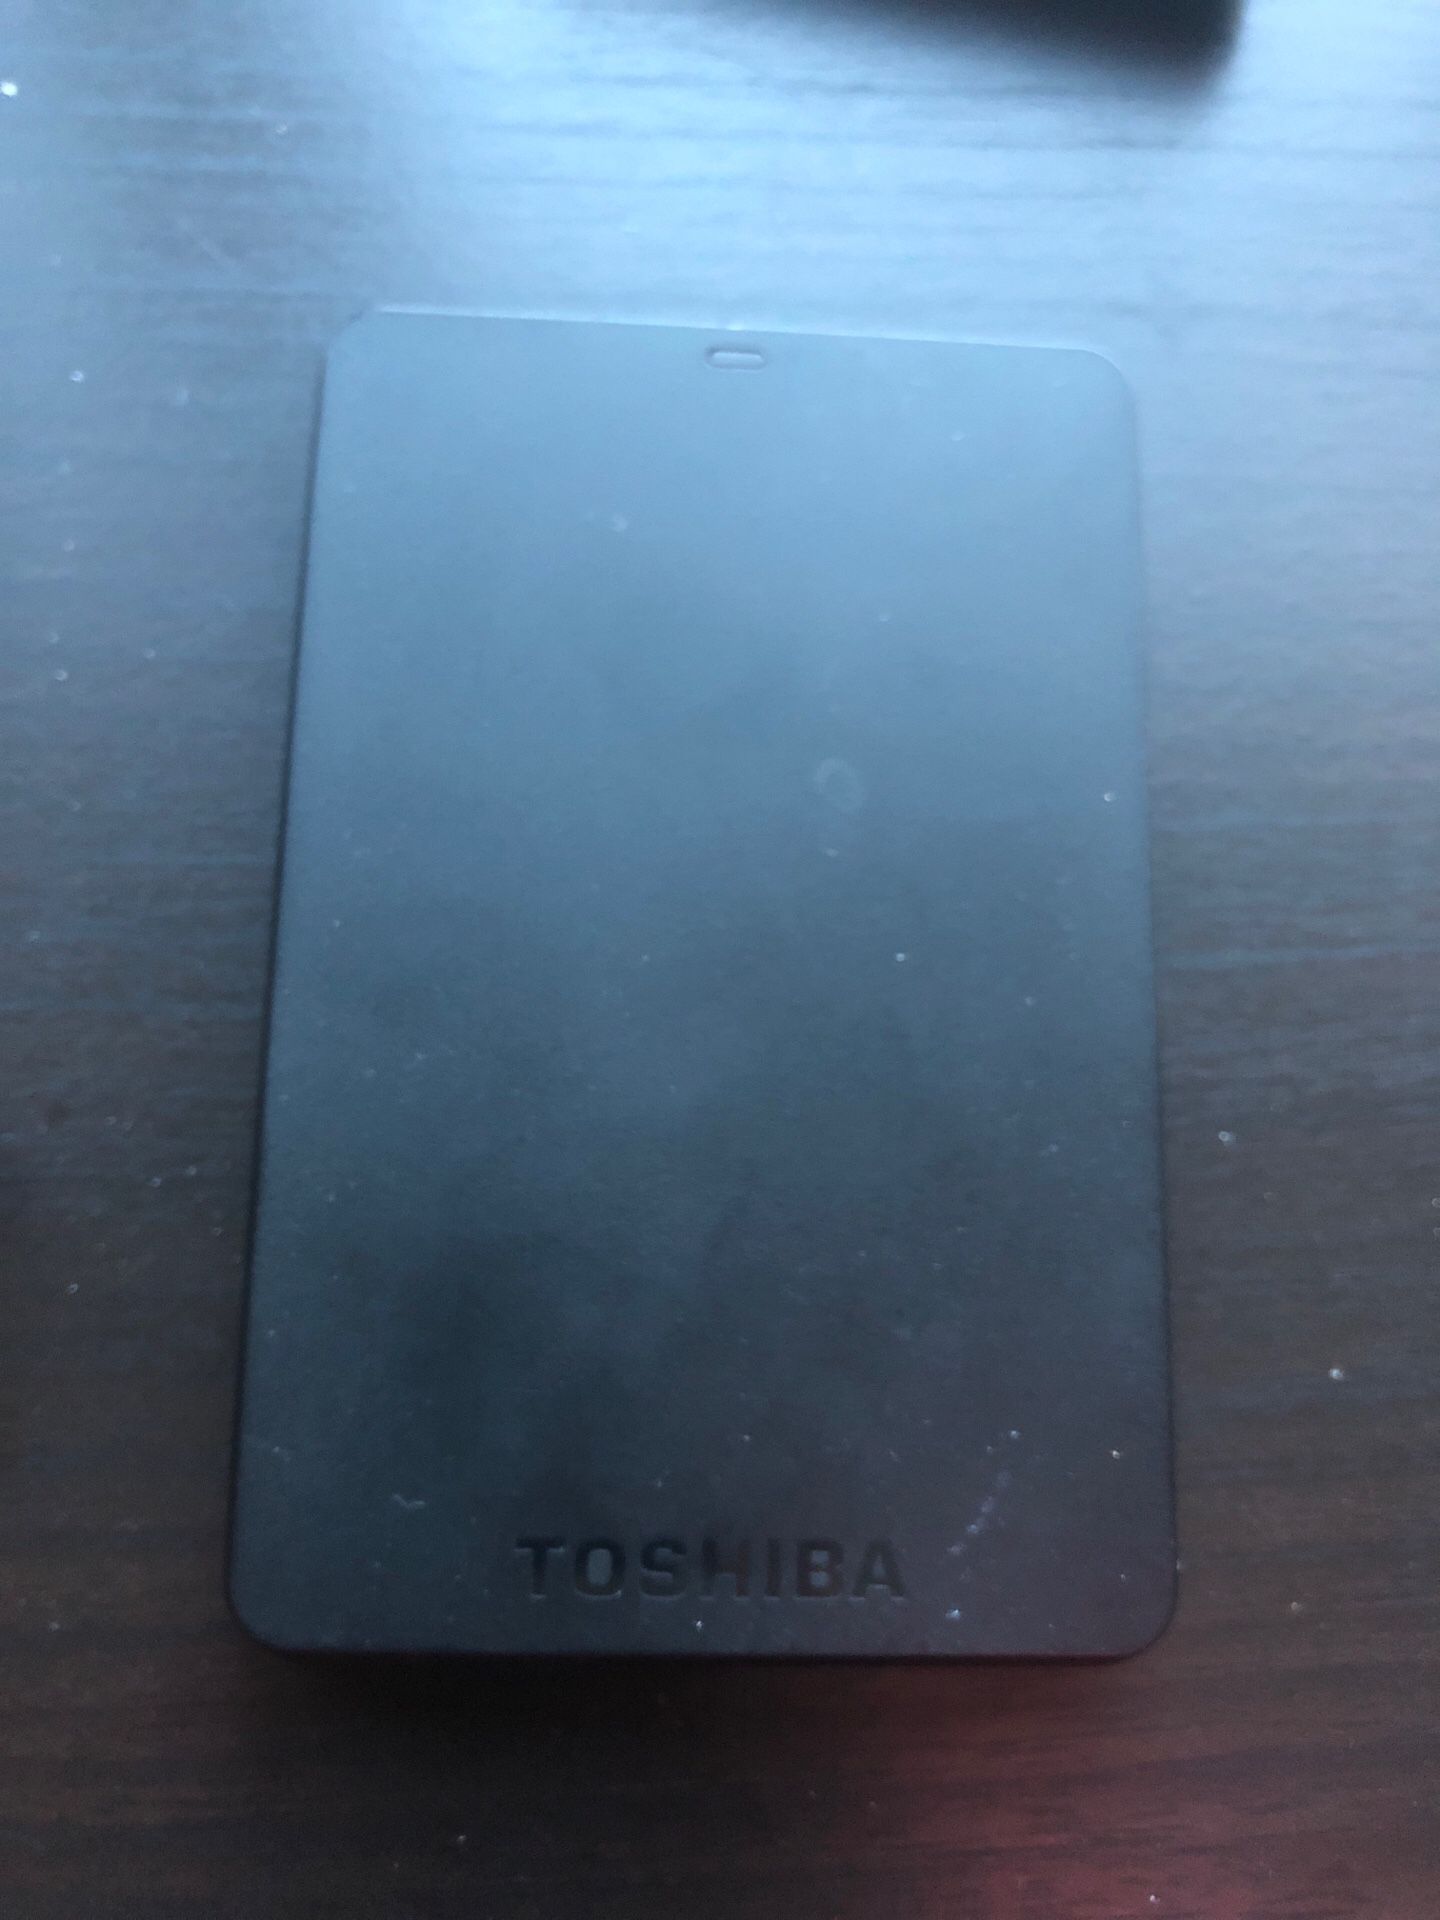 Toshiba 1 TB external hard drive